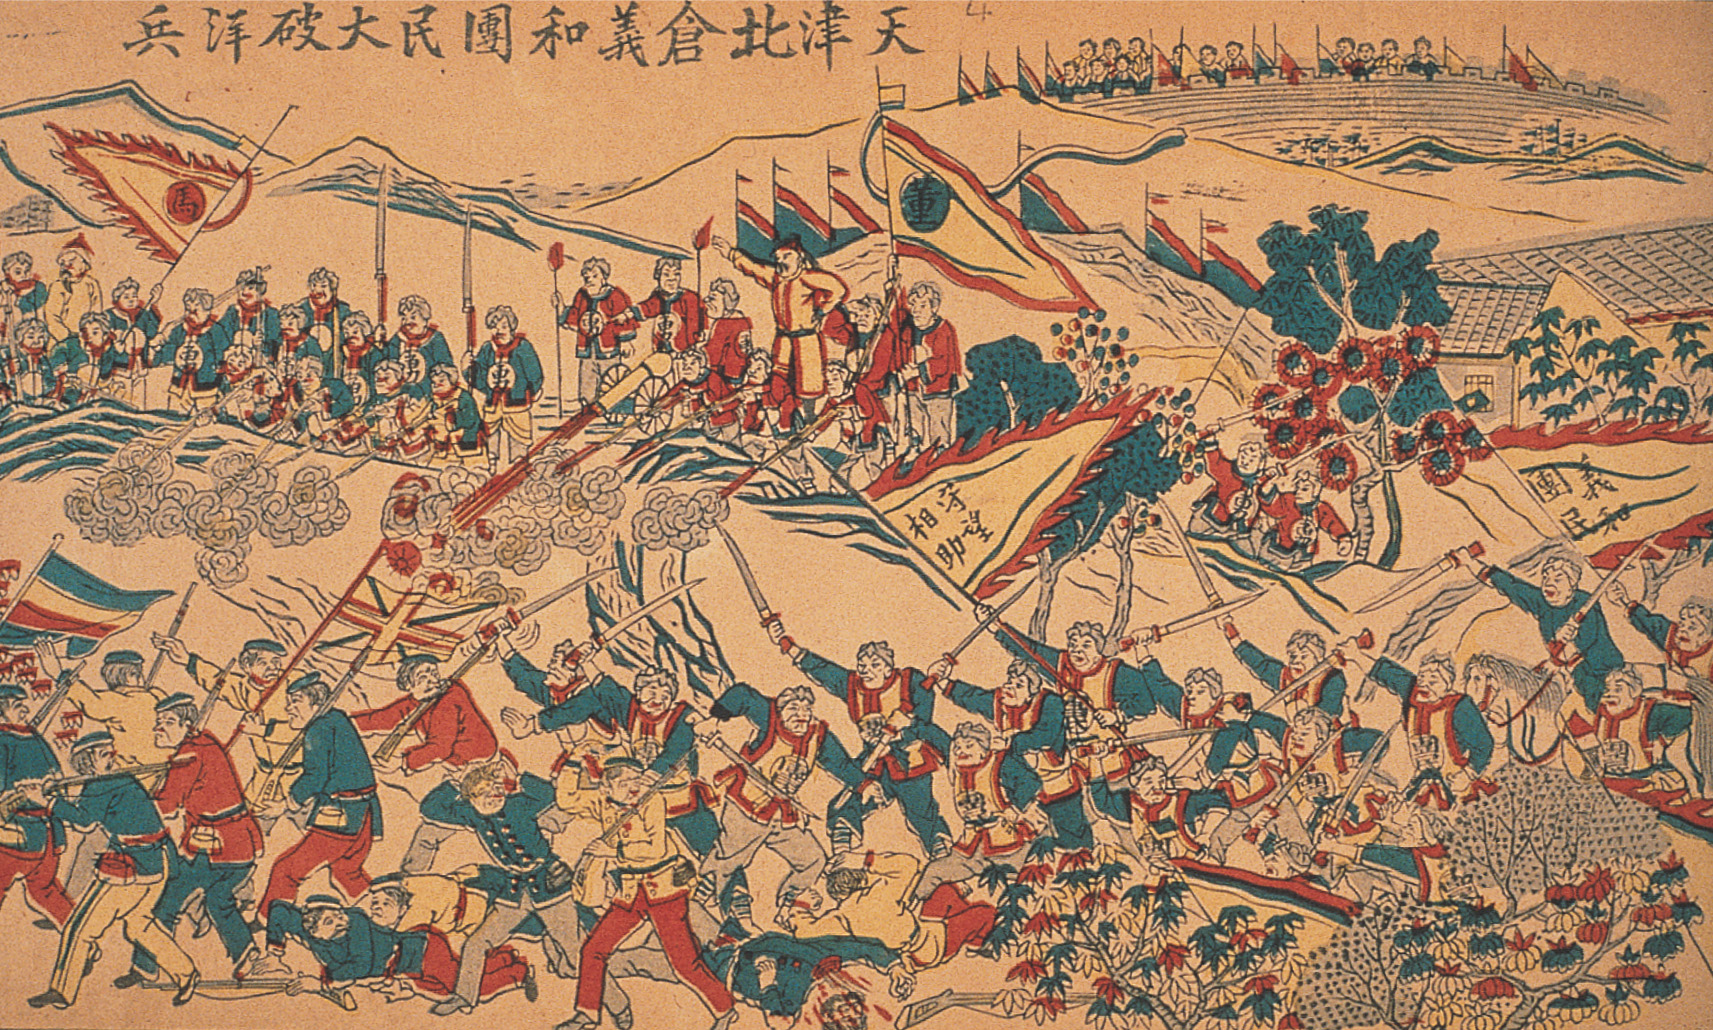 Print: dozens of men attack with swords